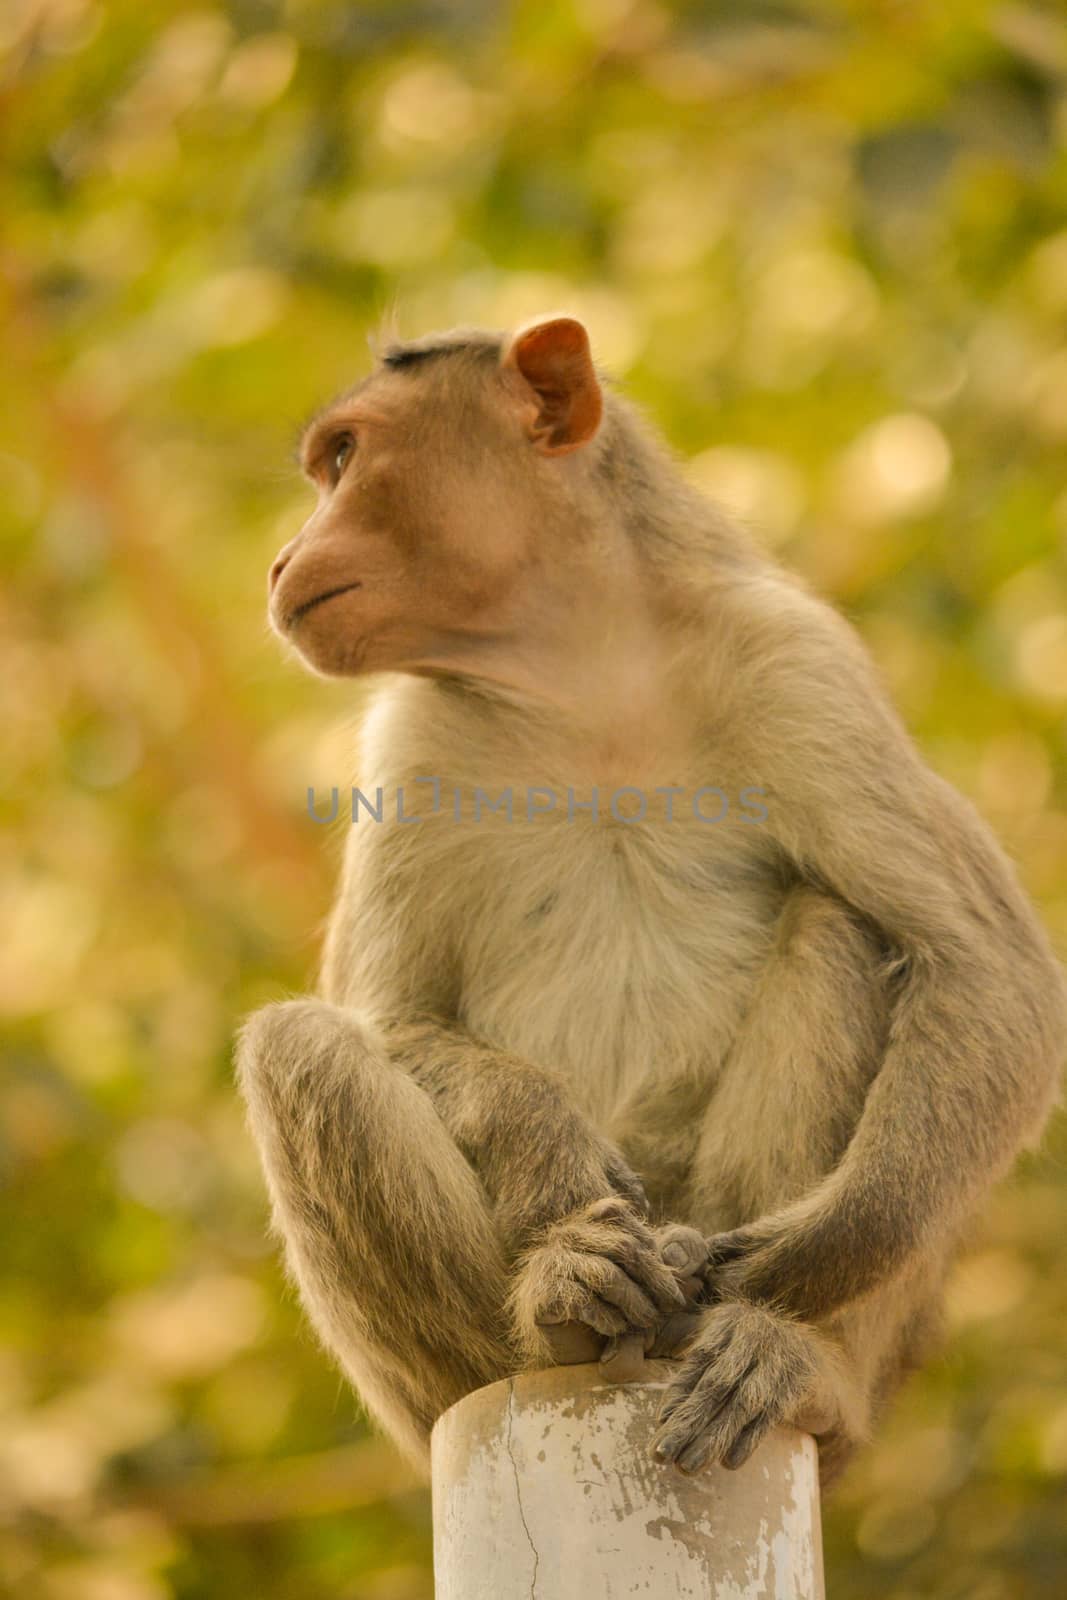 bonnet macaque sitting on pole by lakshmiprasad.maski@gmai.com